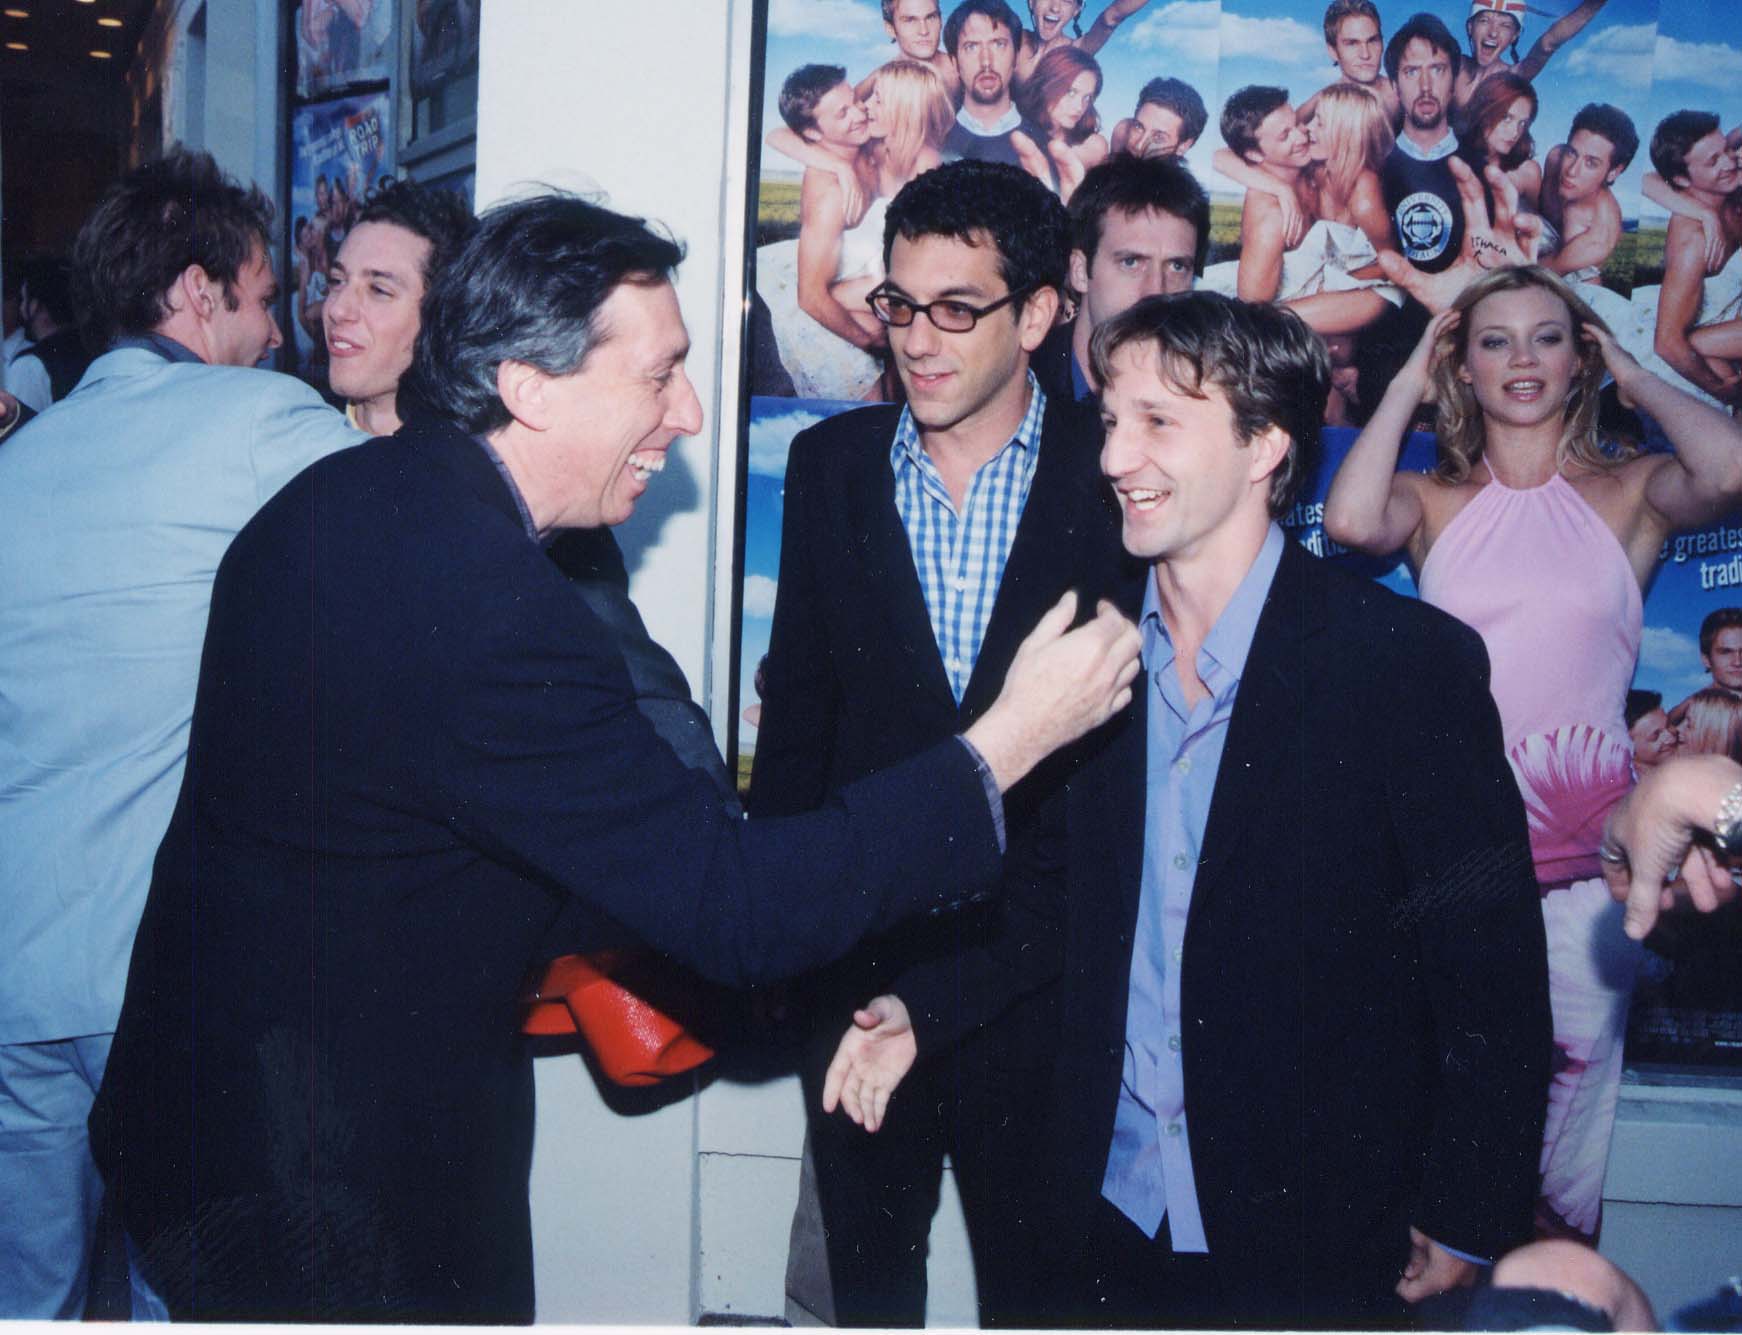 Ivan Reitman, Todd Phillips & Breckin Meyer during "Road Trip" premiere in Westwood, California. | Source: Getty Images